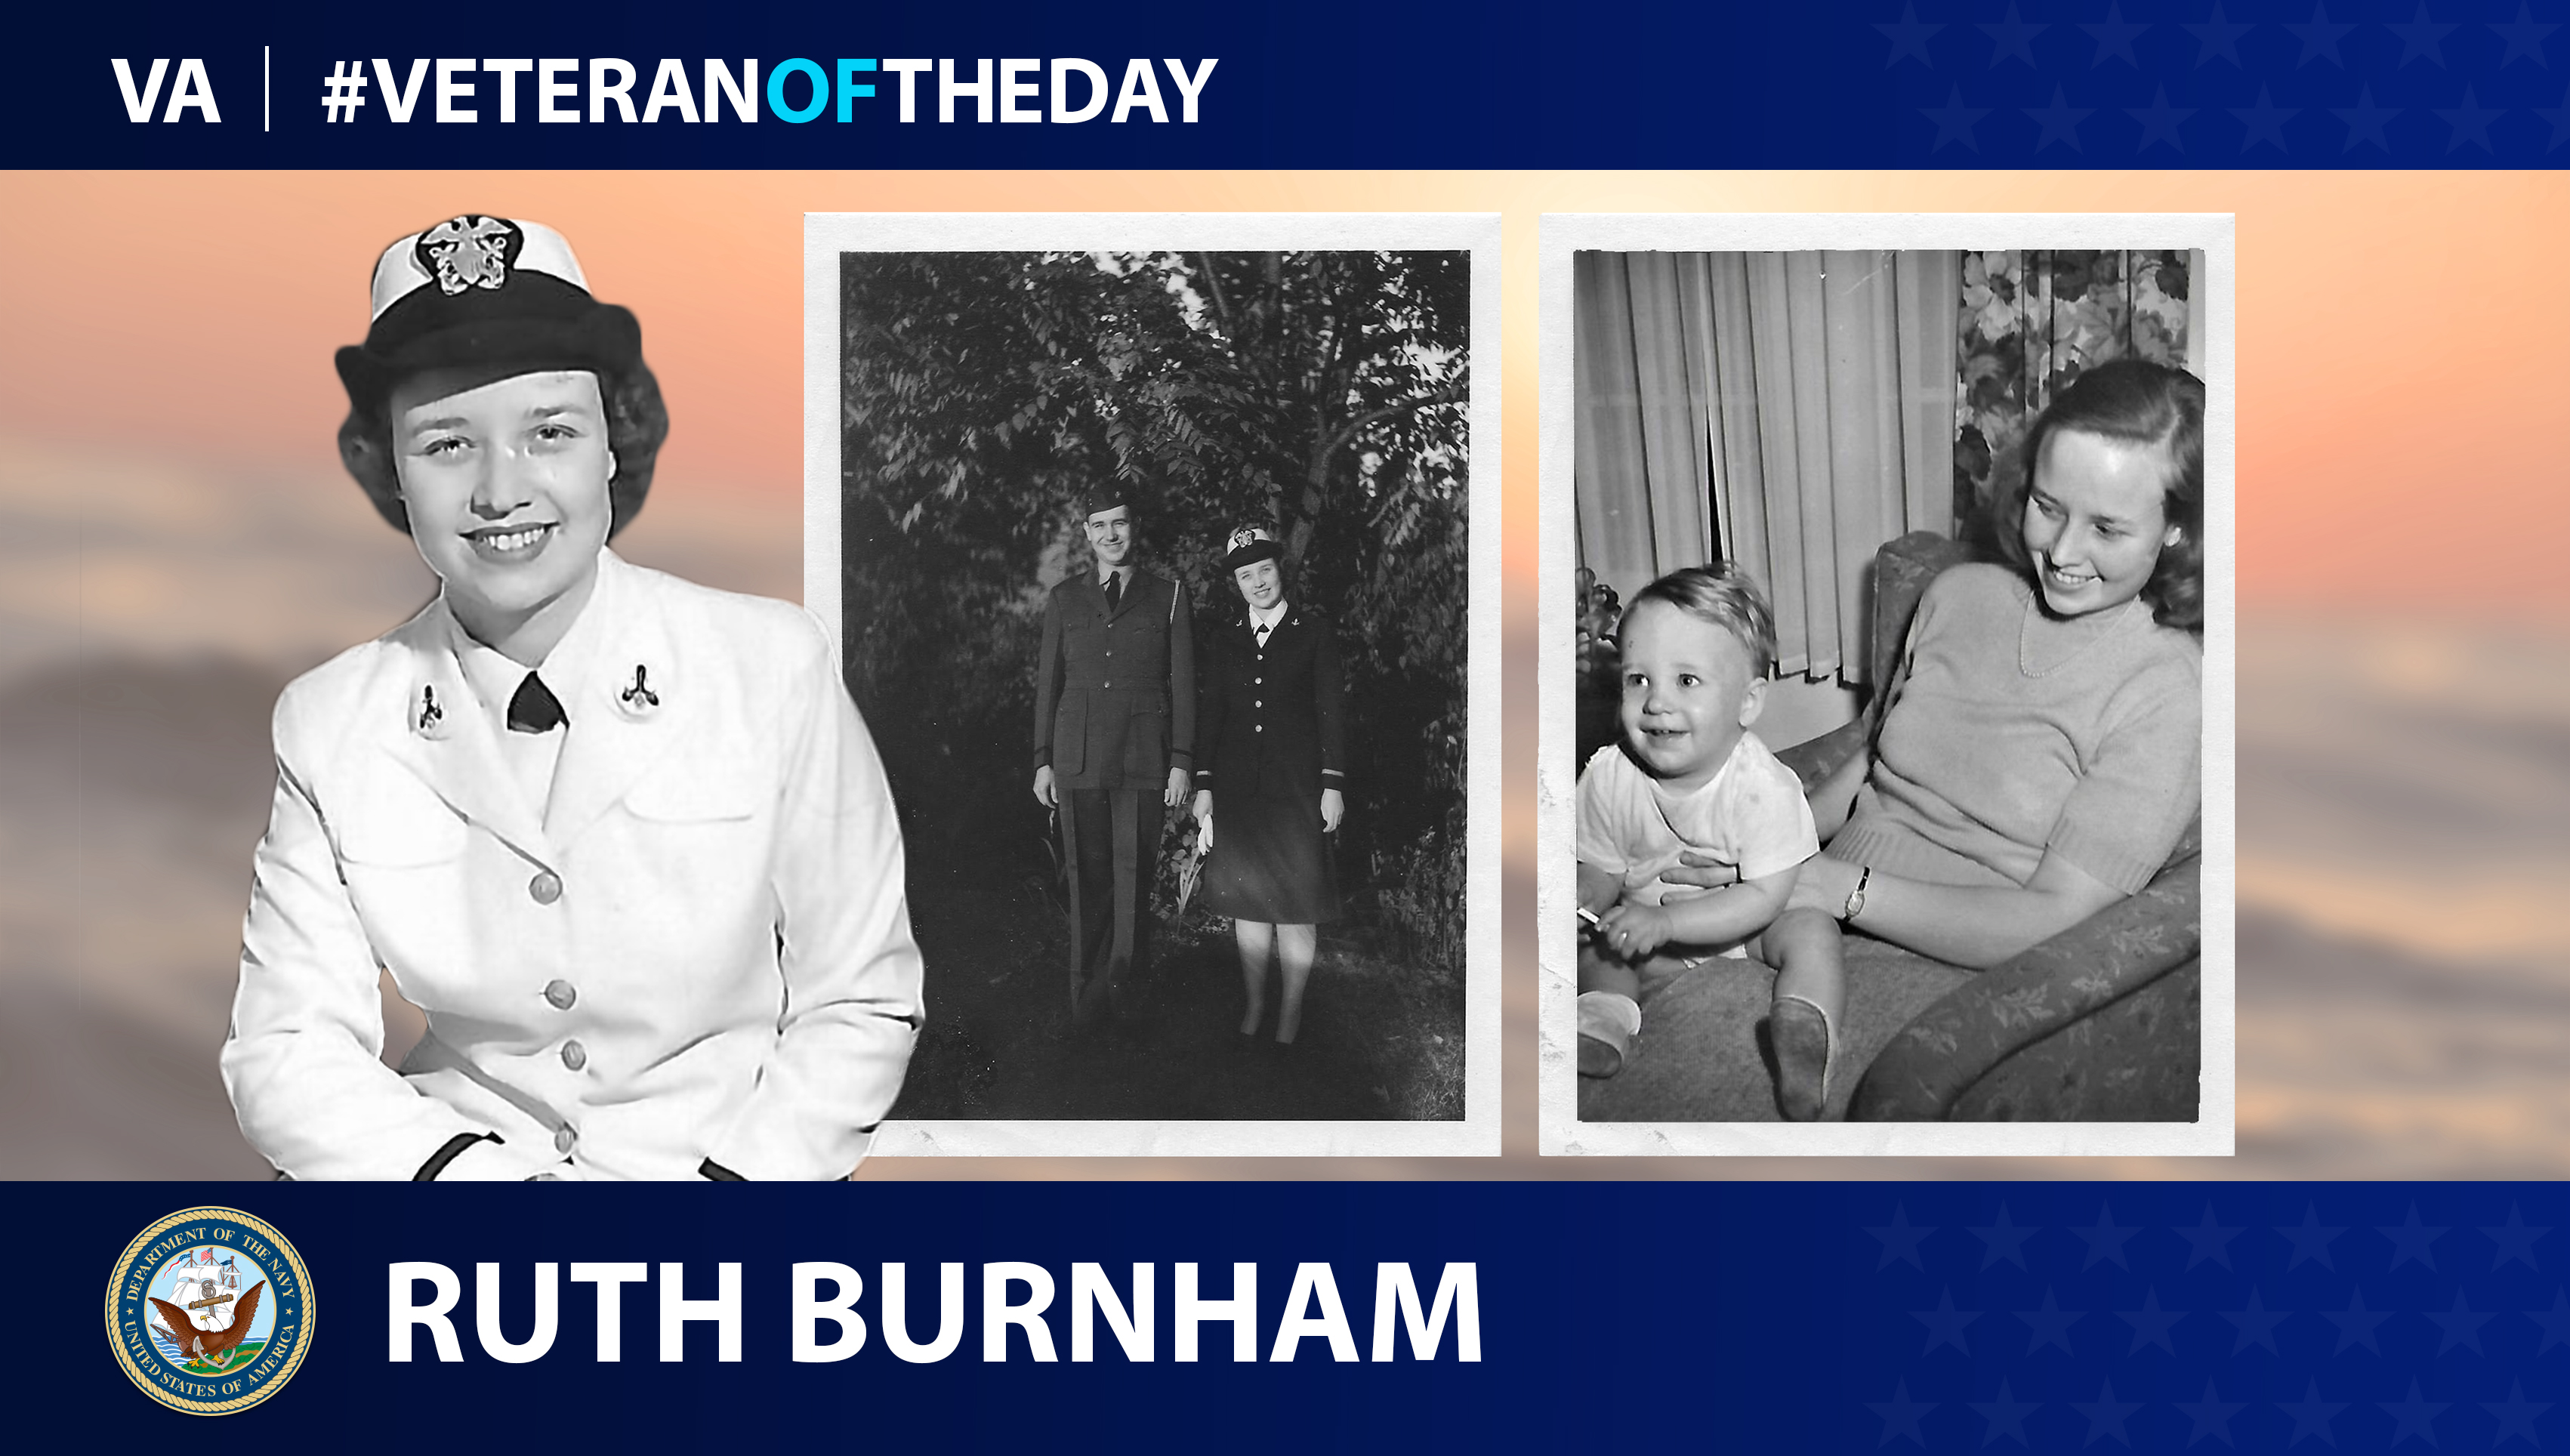 Navy Veteran Ruth Drover Burnham is today's Veteran of the day.